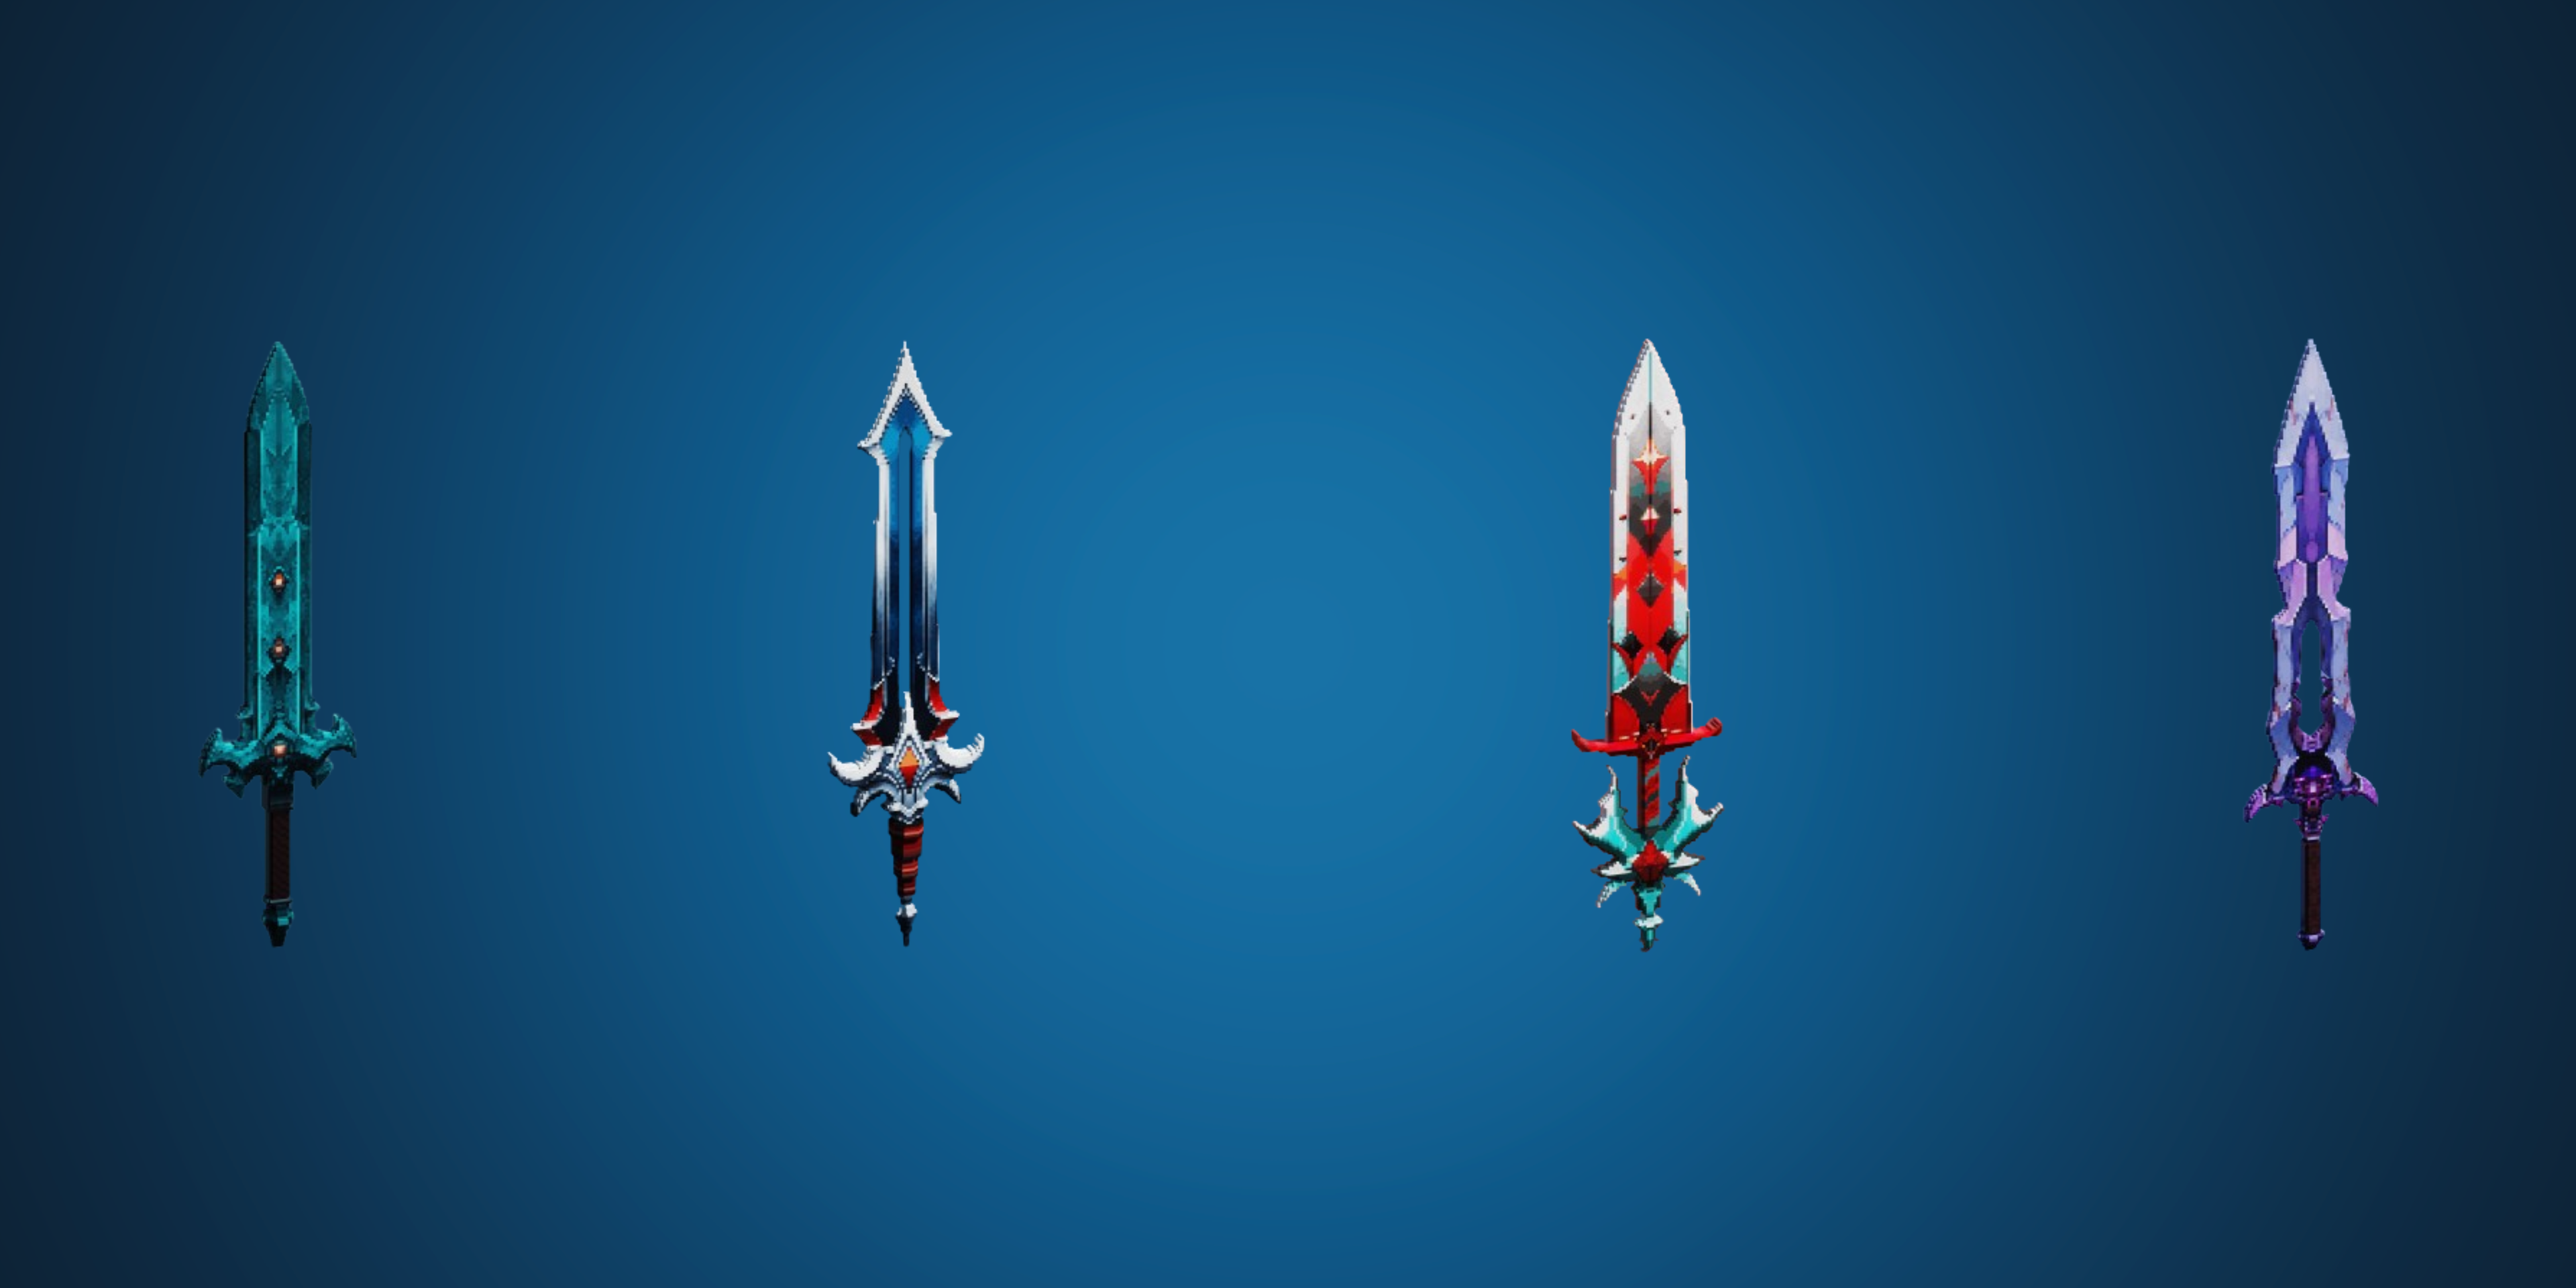 Voxel Epic swords